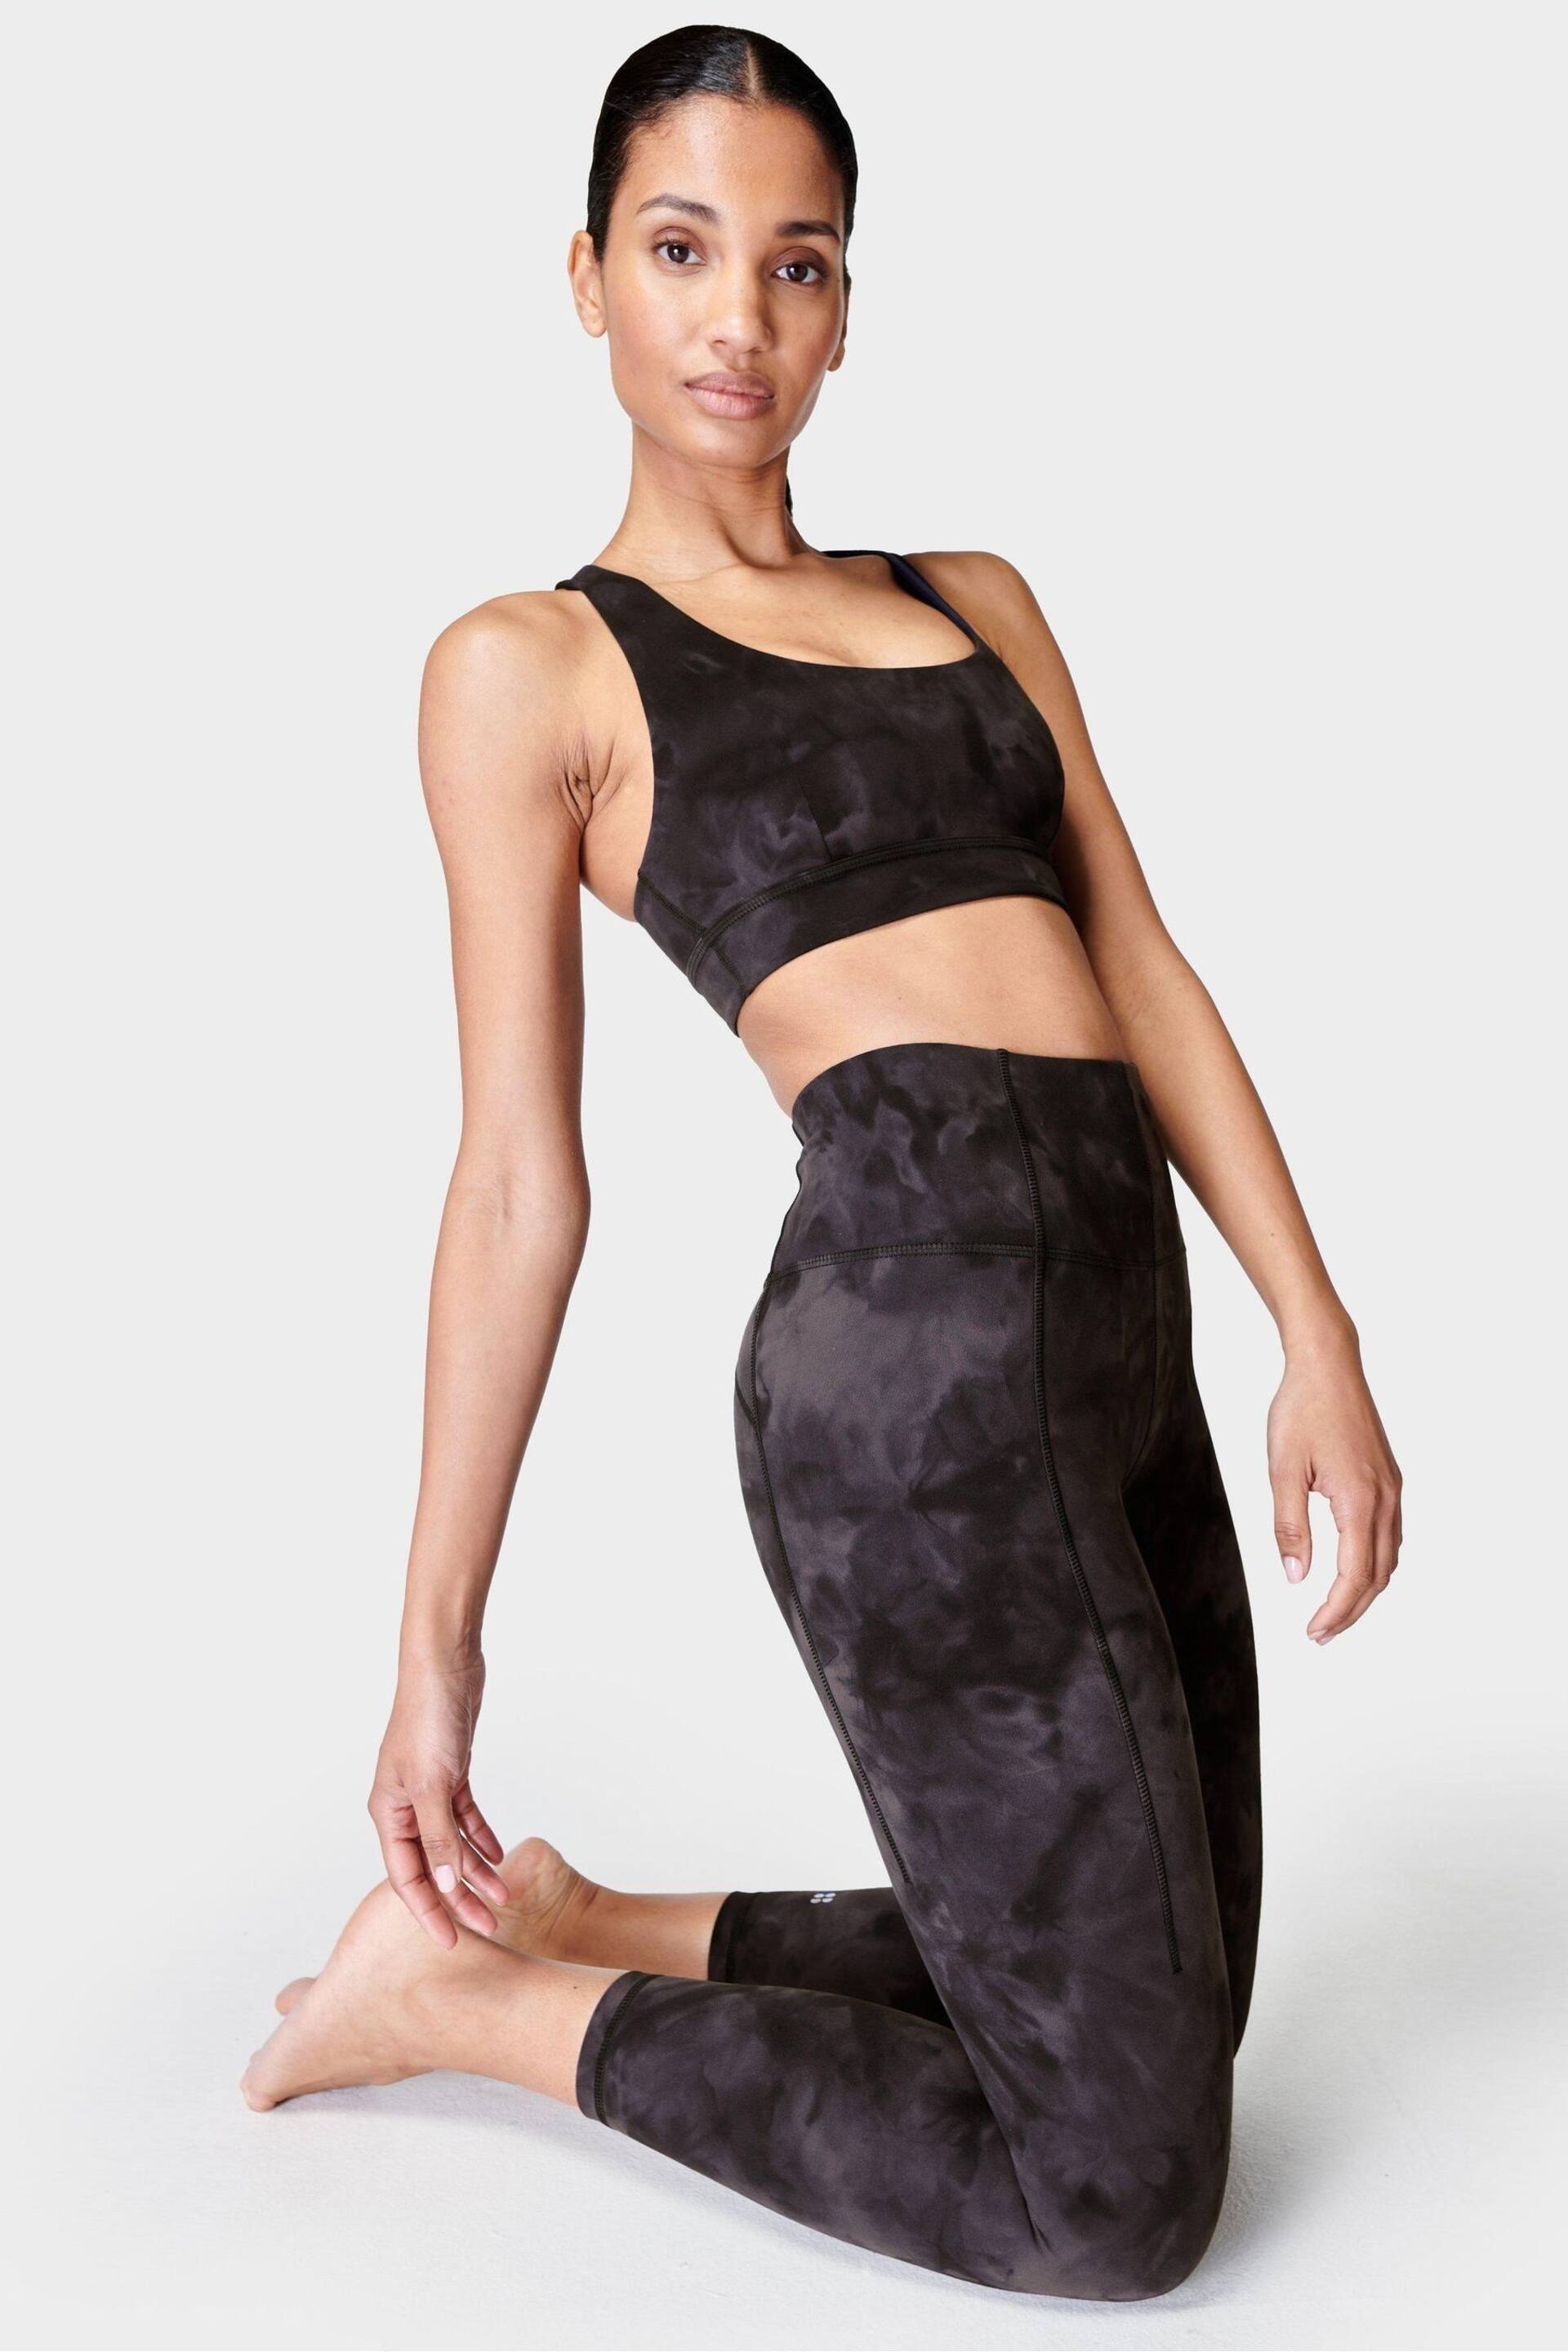 Sweaty Betty Black Spray Dye Print 7/8 Length Super Soft Yoga Leggings - Image 2 of 7